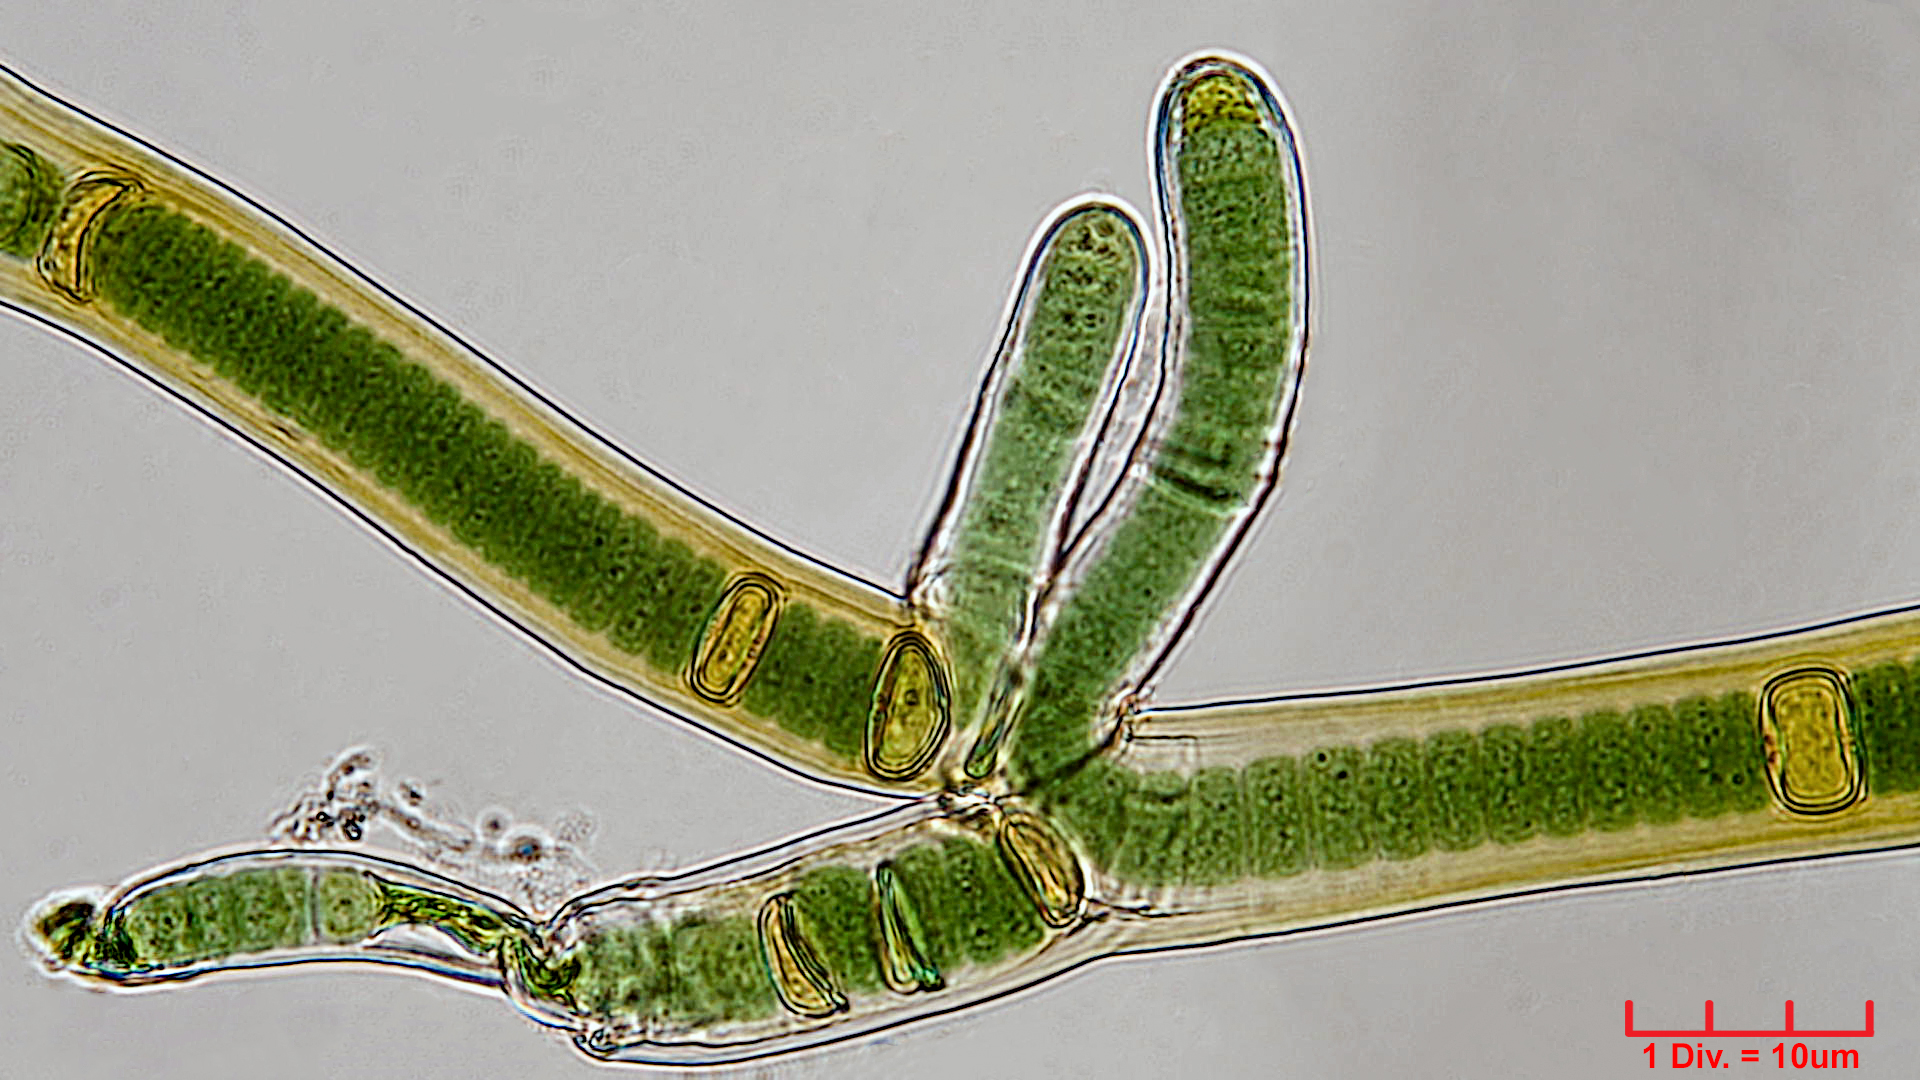 ./././Cyanobacteria/Nostocales/Scytonemataceae/Scytonema/crispum/scytonema-crispum-350.jpg